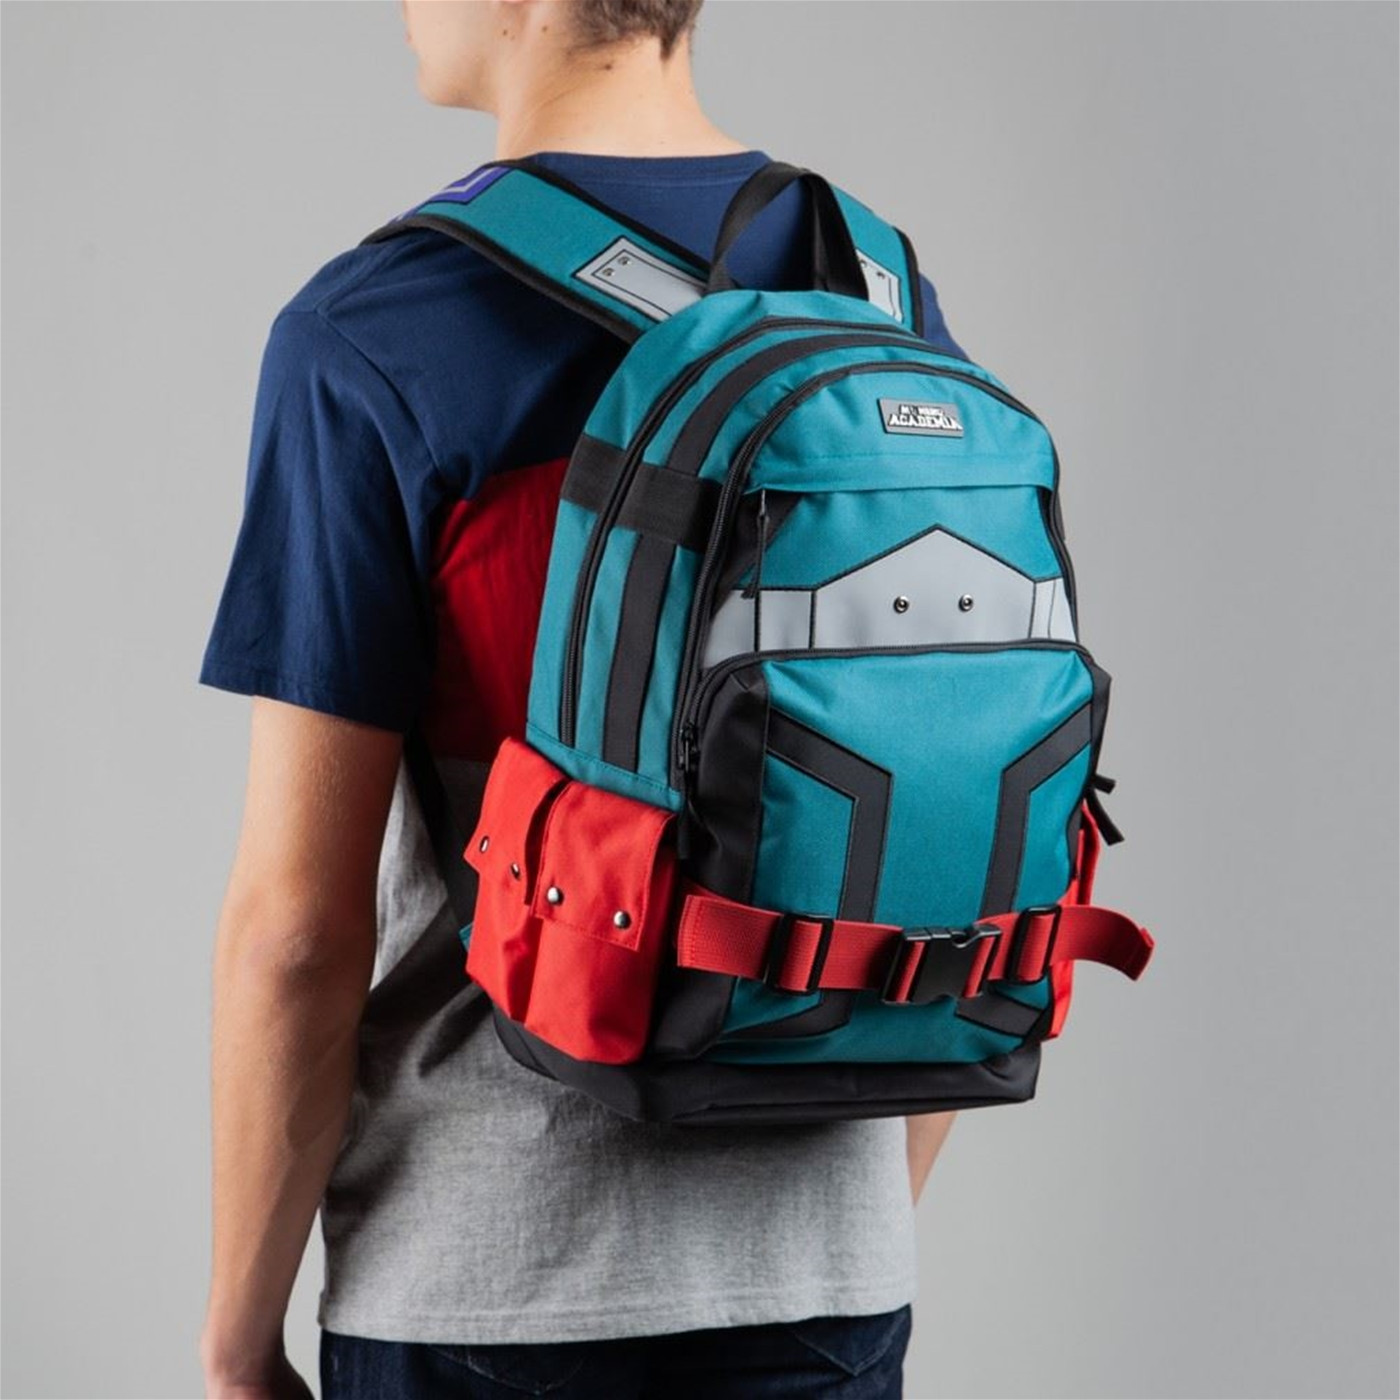 My Hero Academia Deku Suitup Backpack